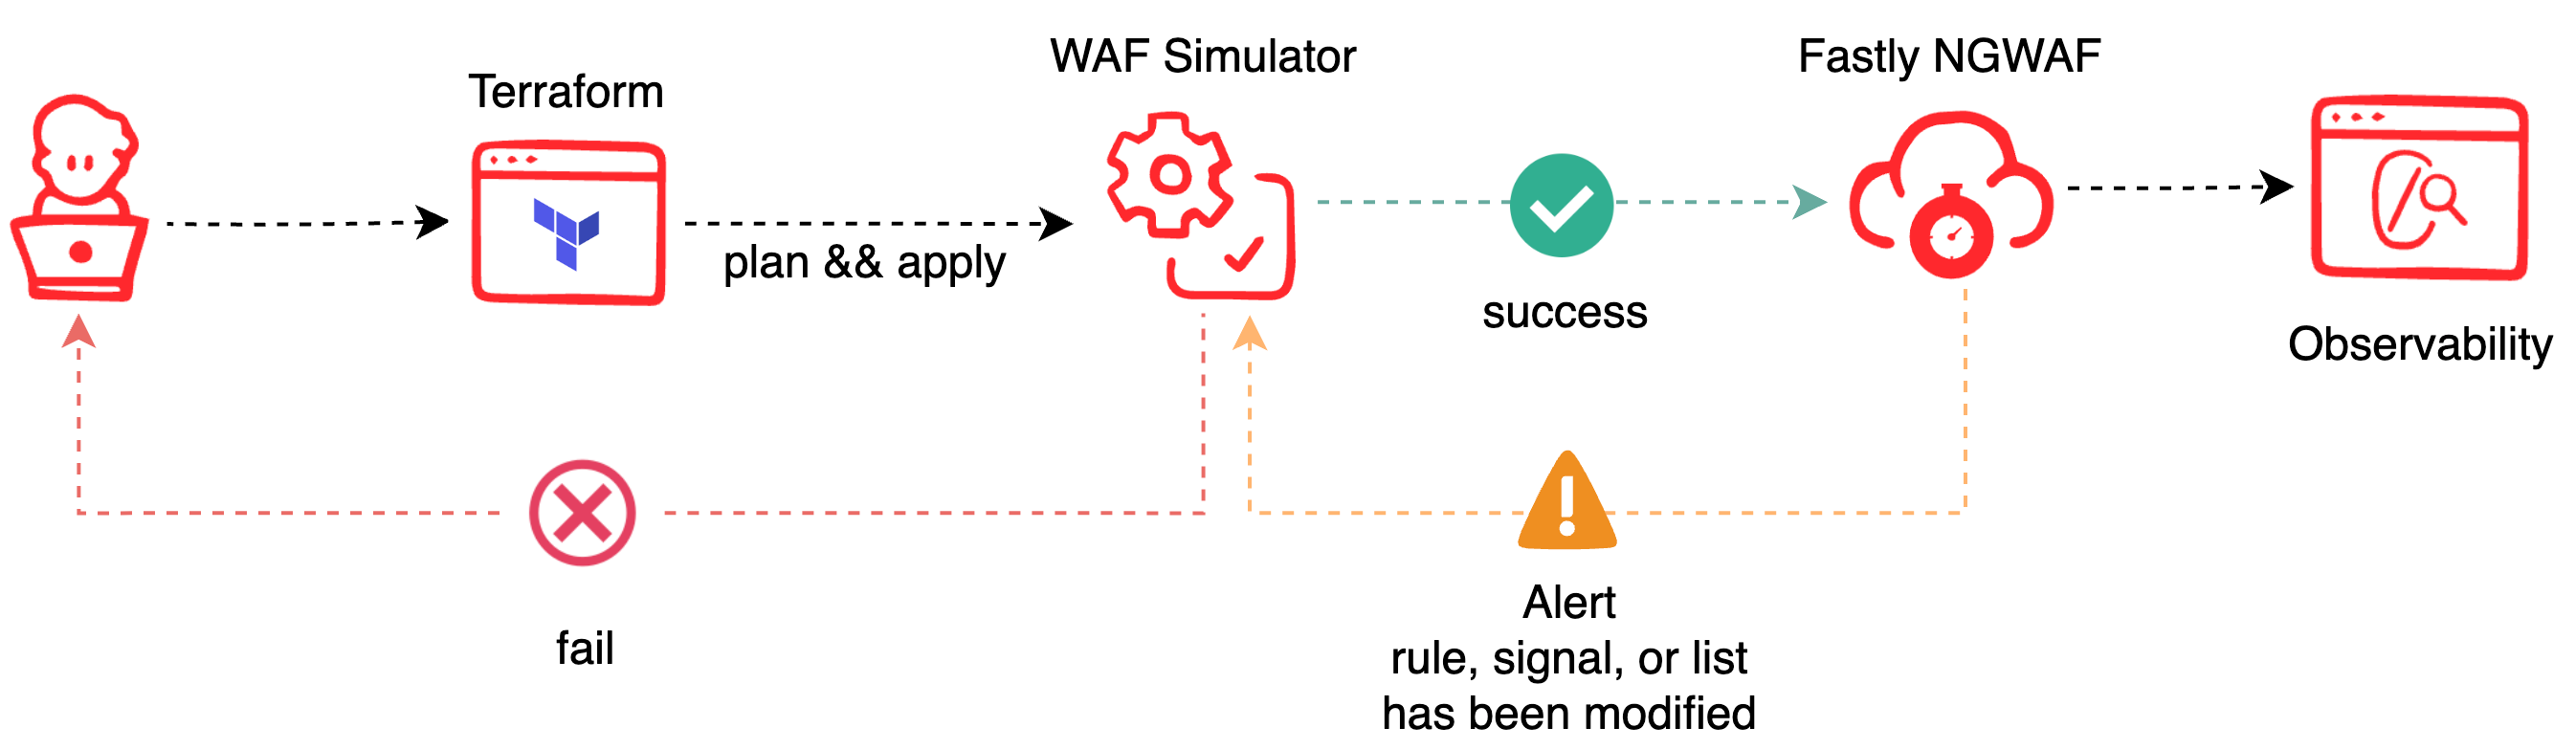 WAF Simulator_Automated NGWAF DevSecOps Workflow